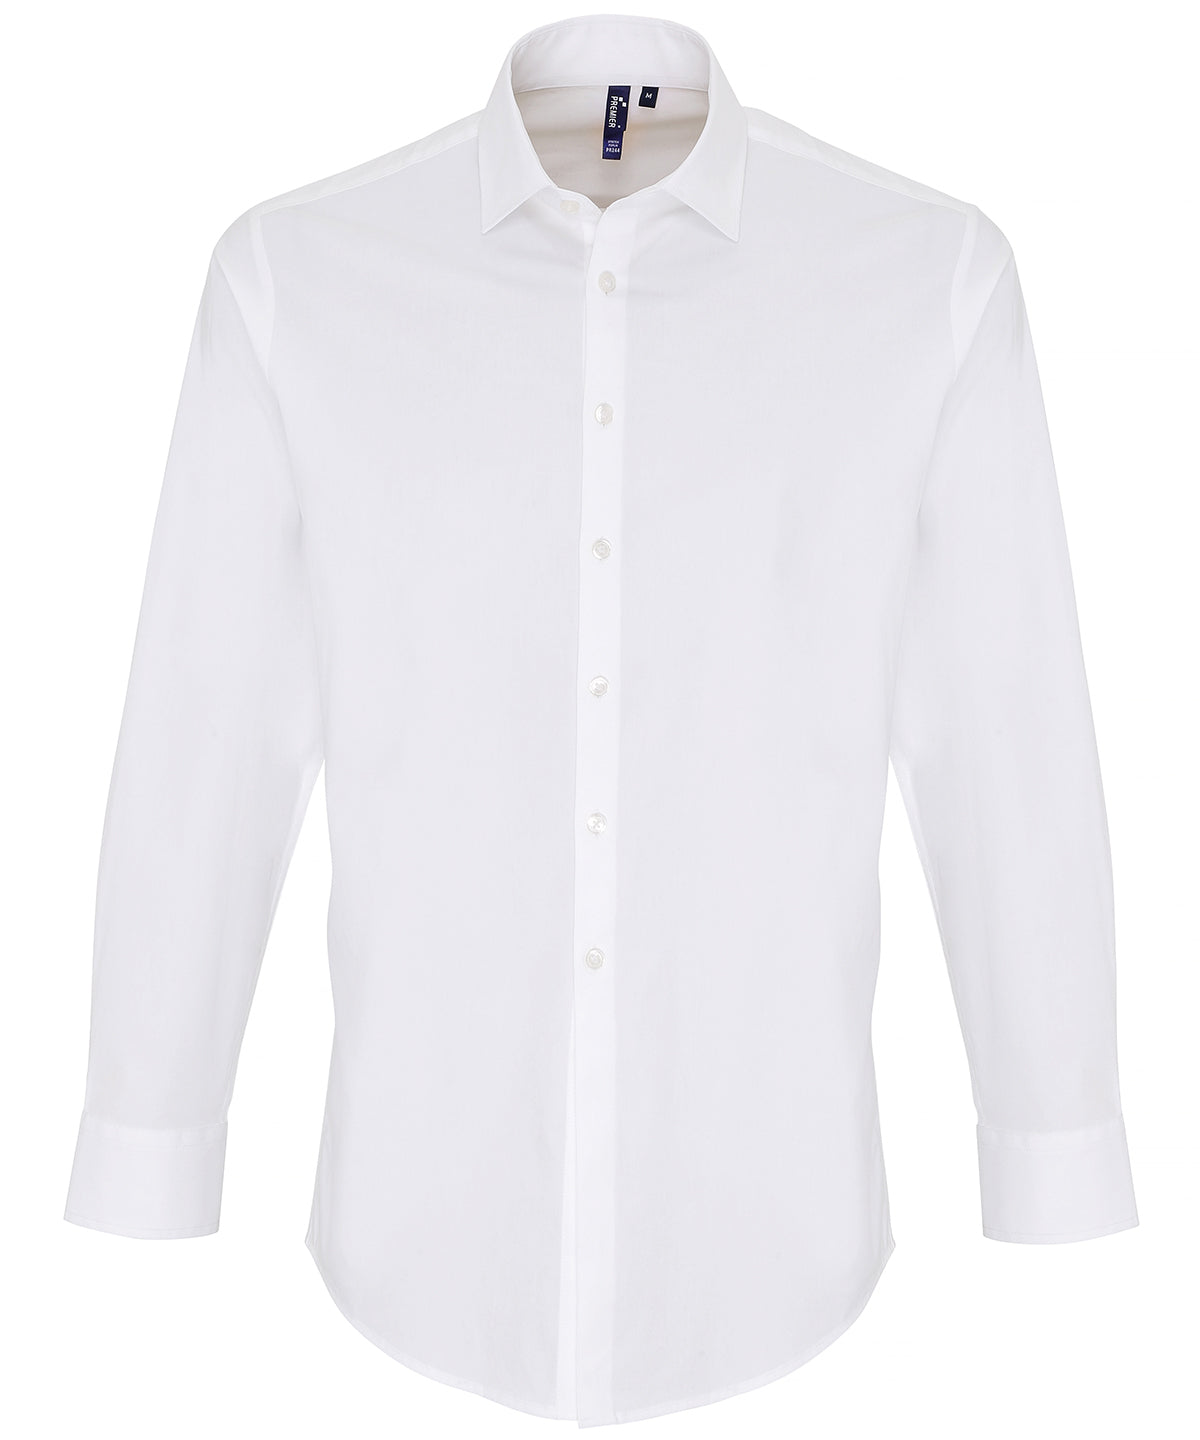 Bolir - Stretch Fit Cotton Poplin Long Sleeve Shirt